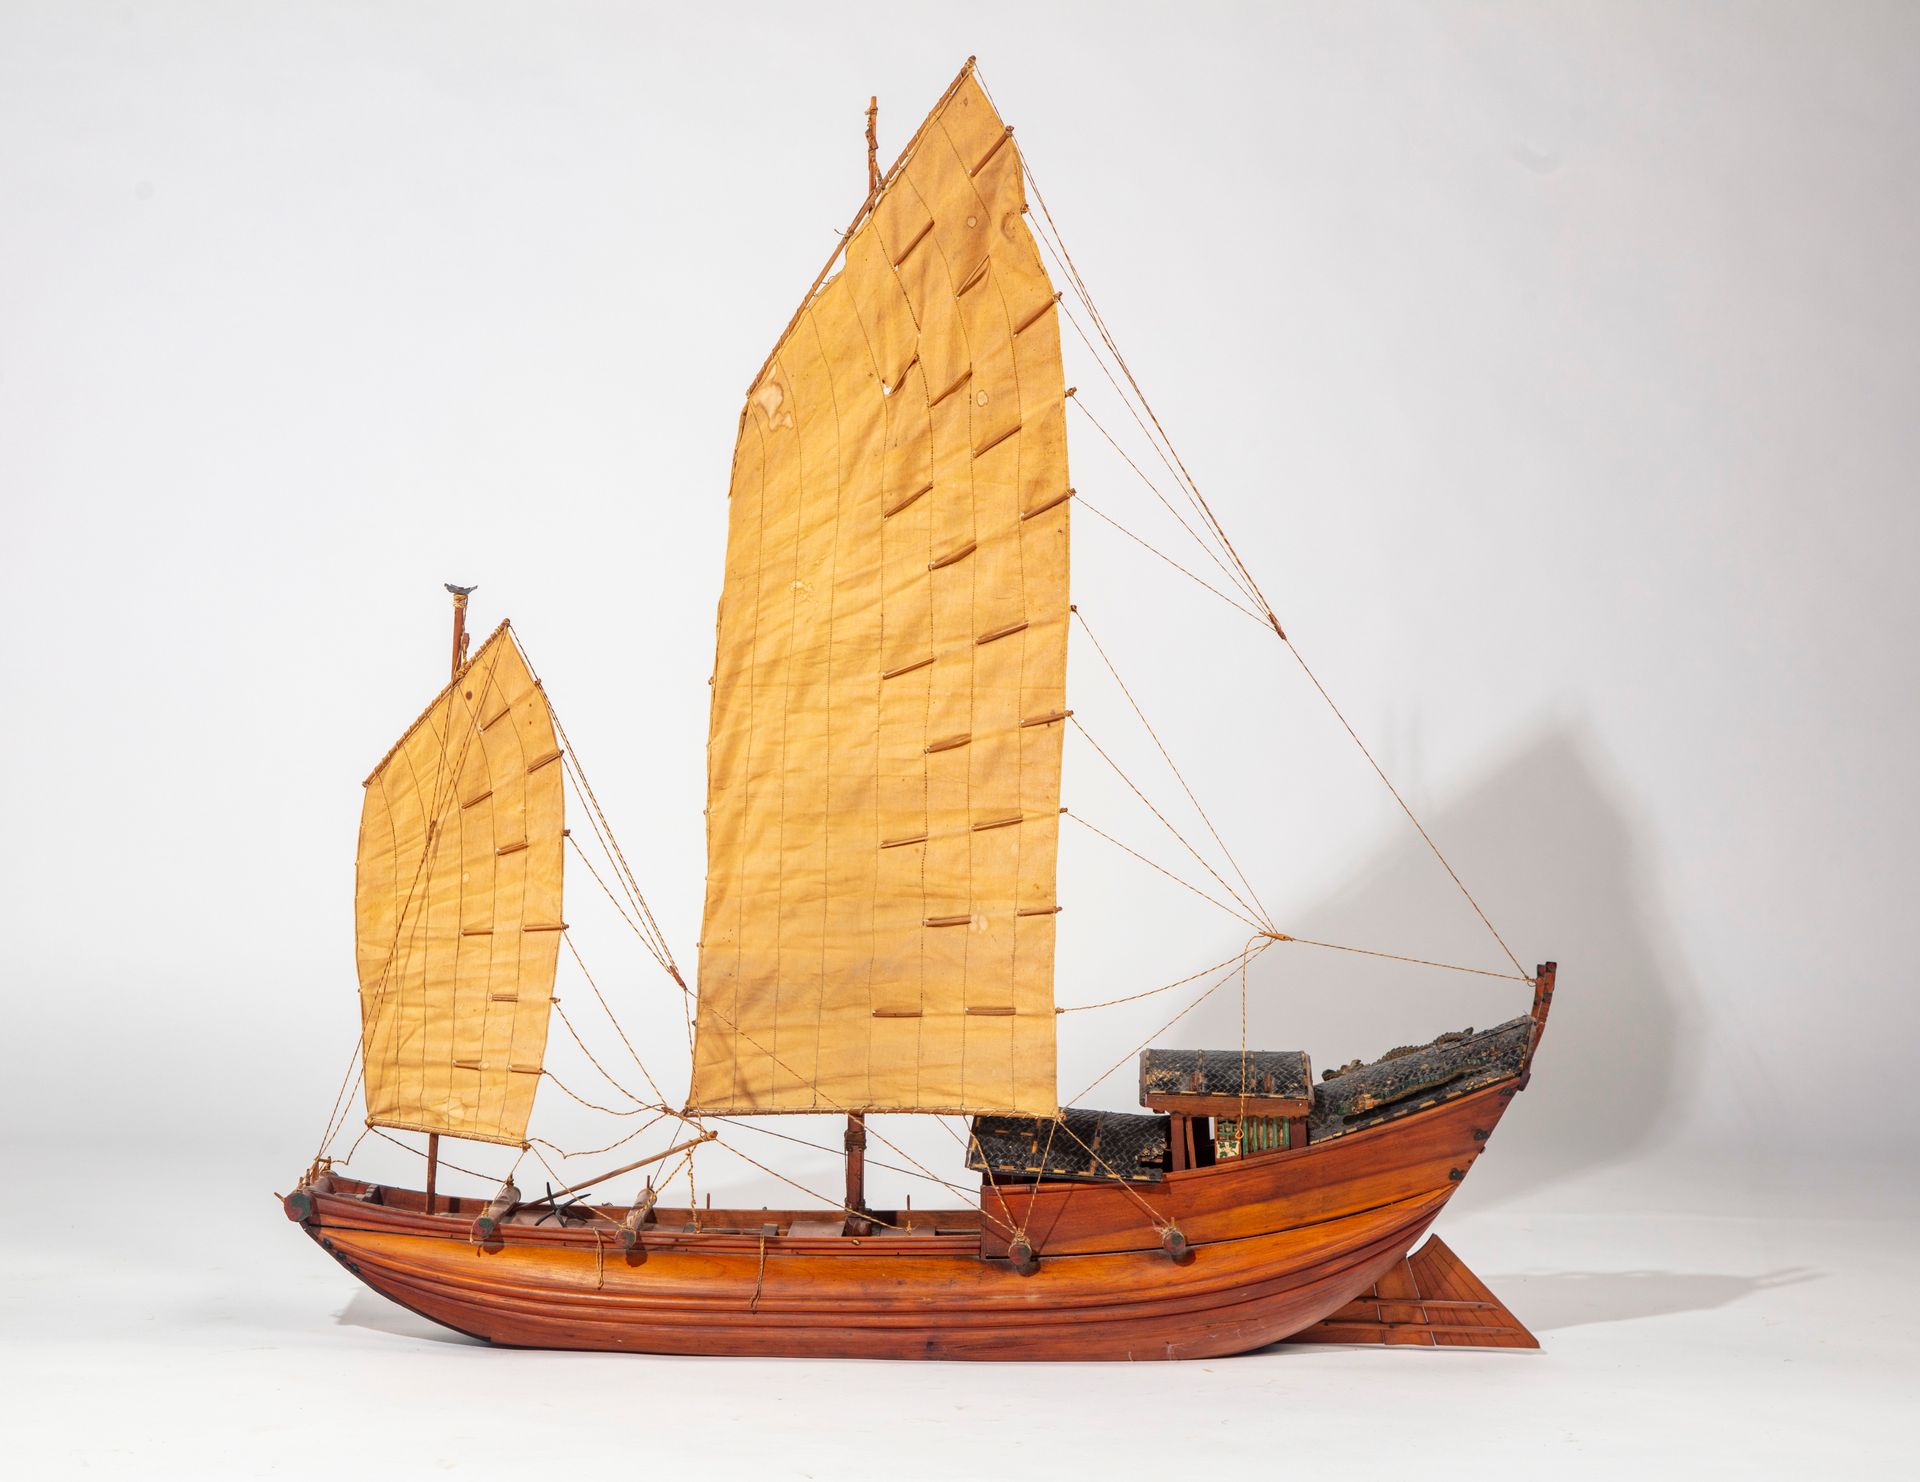 CHINE CHINA - 20. Jahrhundert

Modell einer Holzdschunke

H. 91 cm ; B. 91 cm ; &hellip;